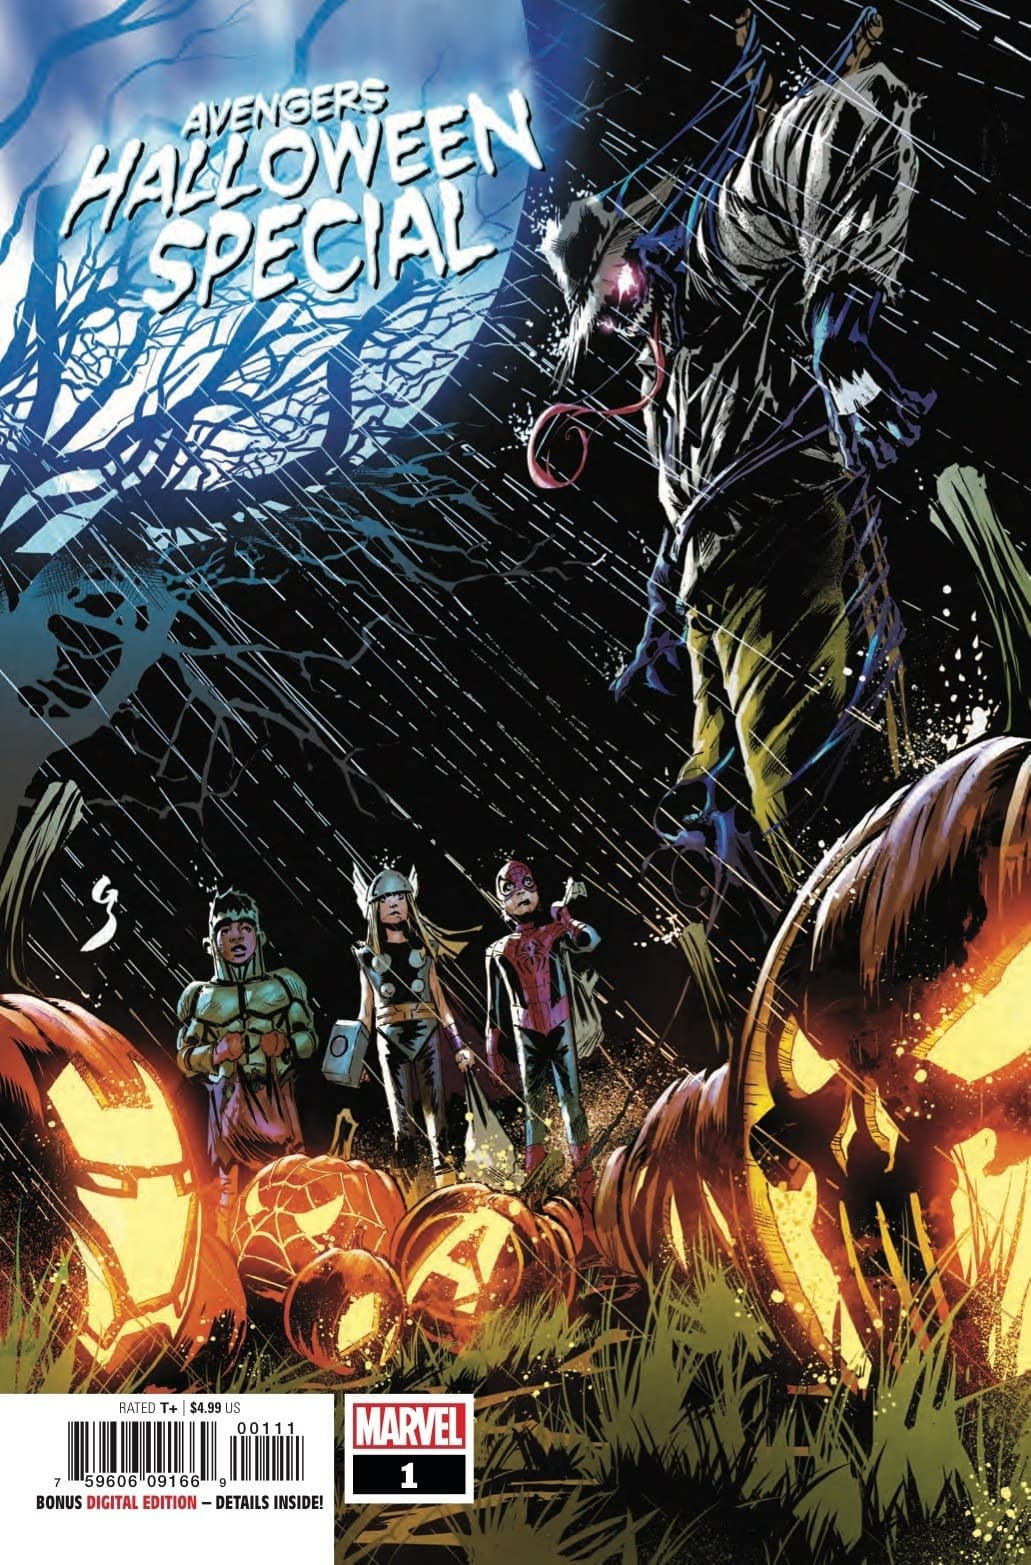 Matt Murdock Has a Very Bad Trip in Next Week's Avengers Halloween Special